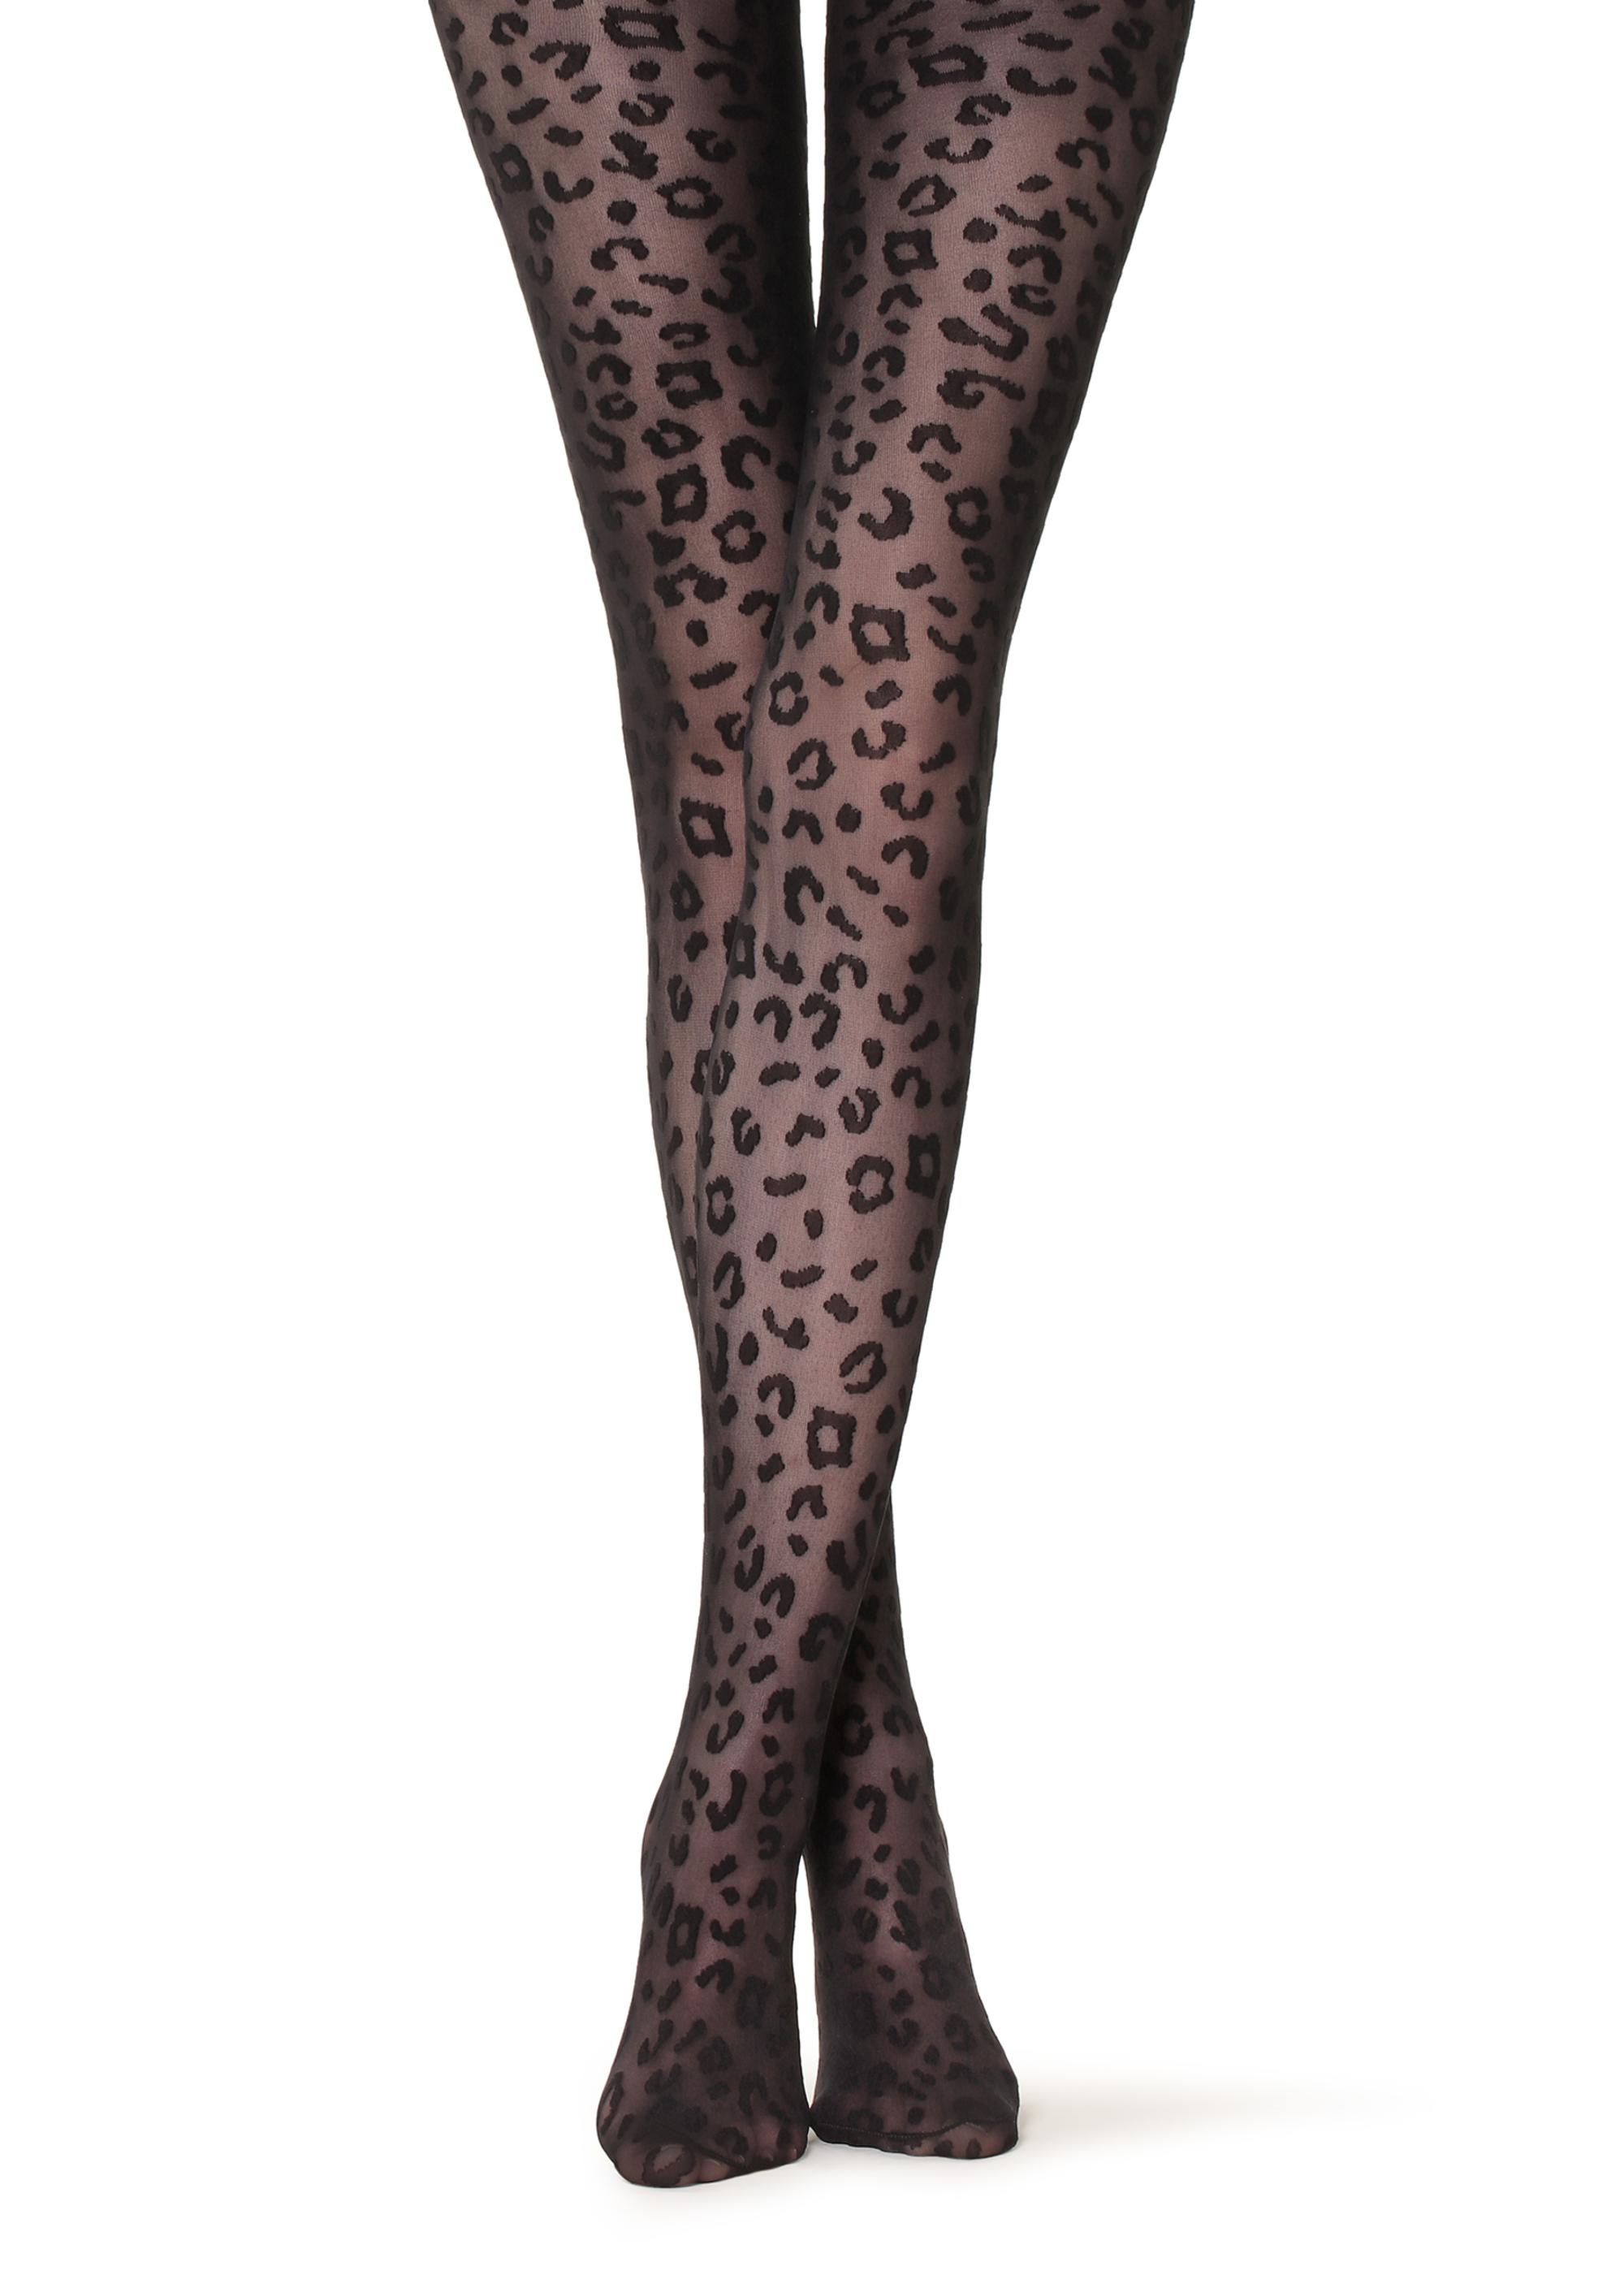 Black Sheer Lace Stockings Hold ups lingerie fancy dress costume Fever 